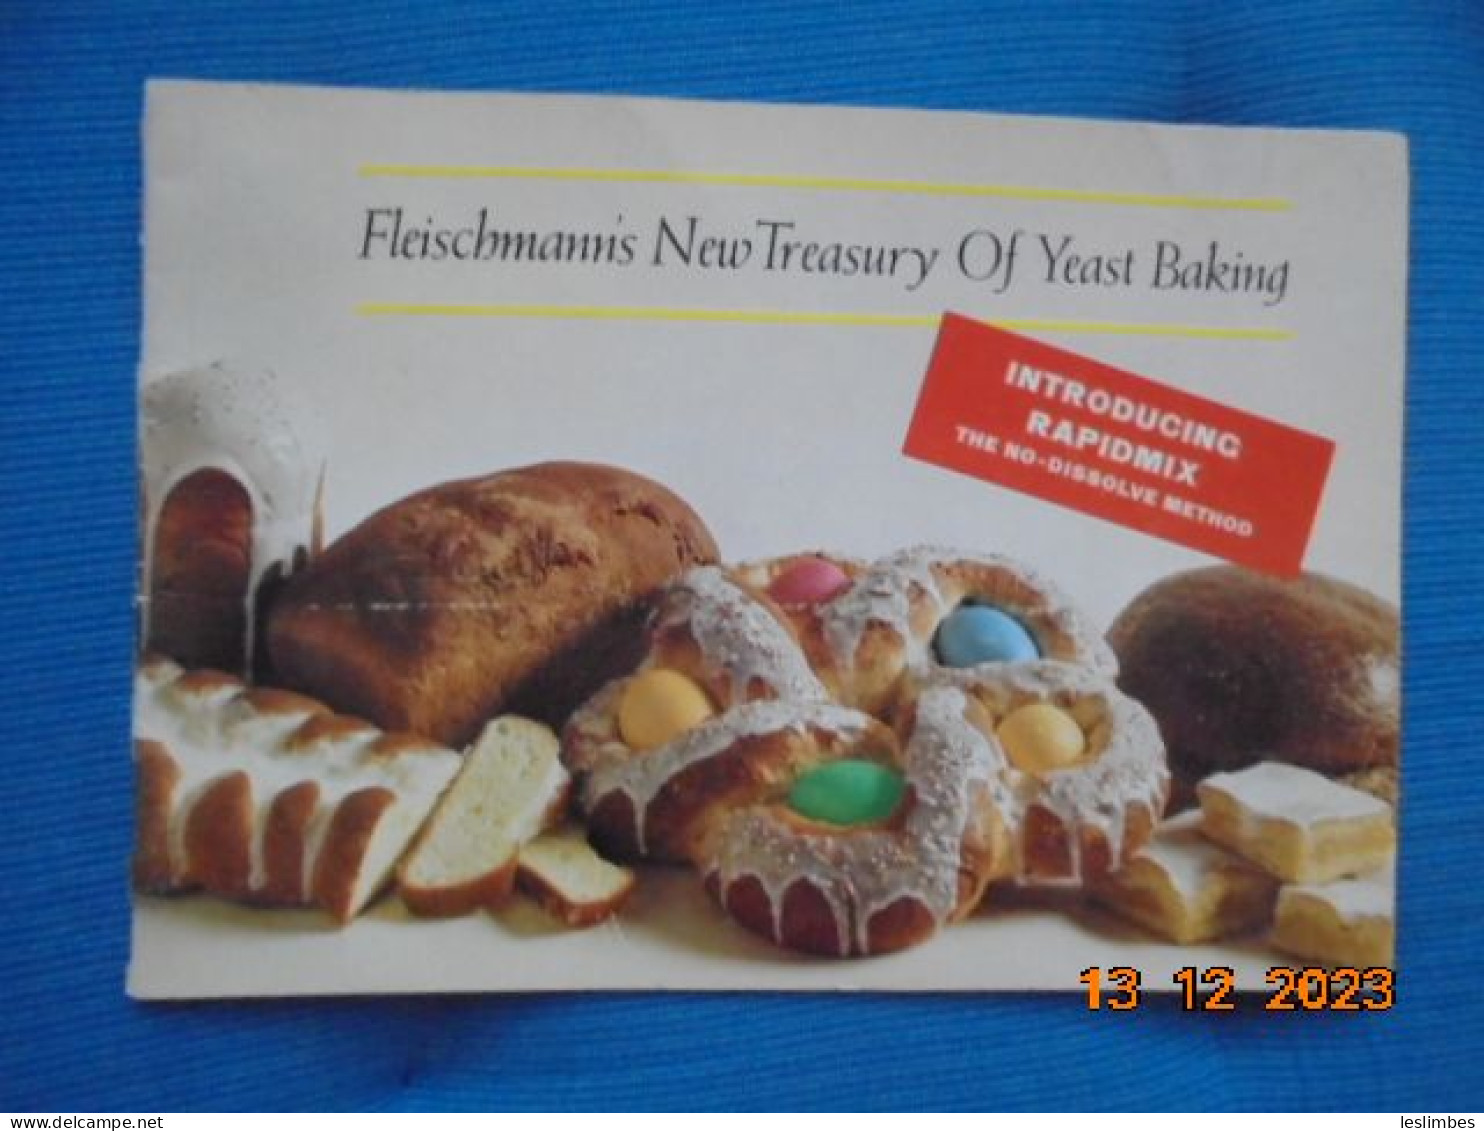 Fleischmann's New Treasury Of Yeast Baking : Introducing Rapidmix The No-Dissolve Method 1968 - American (US)